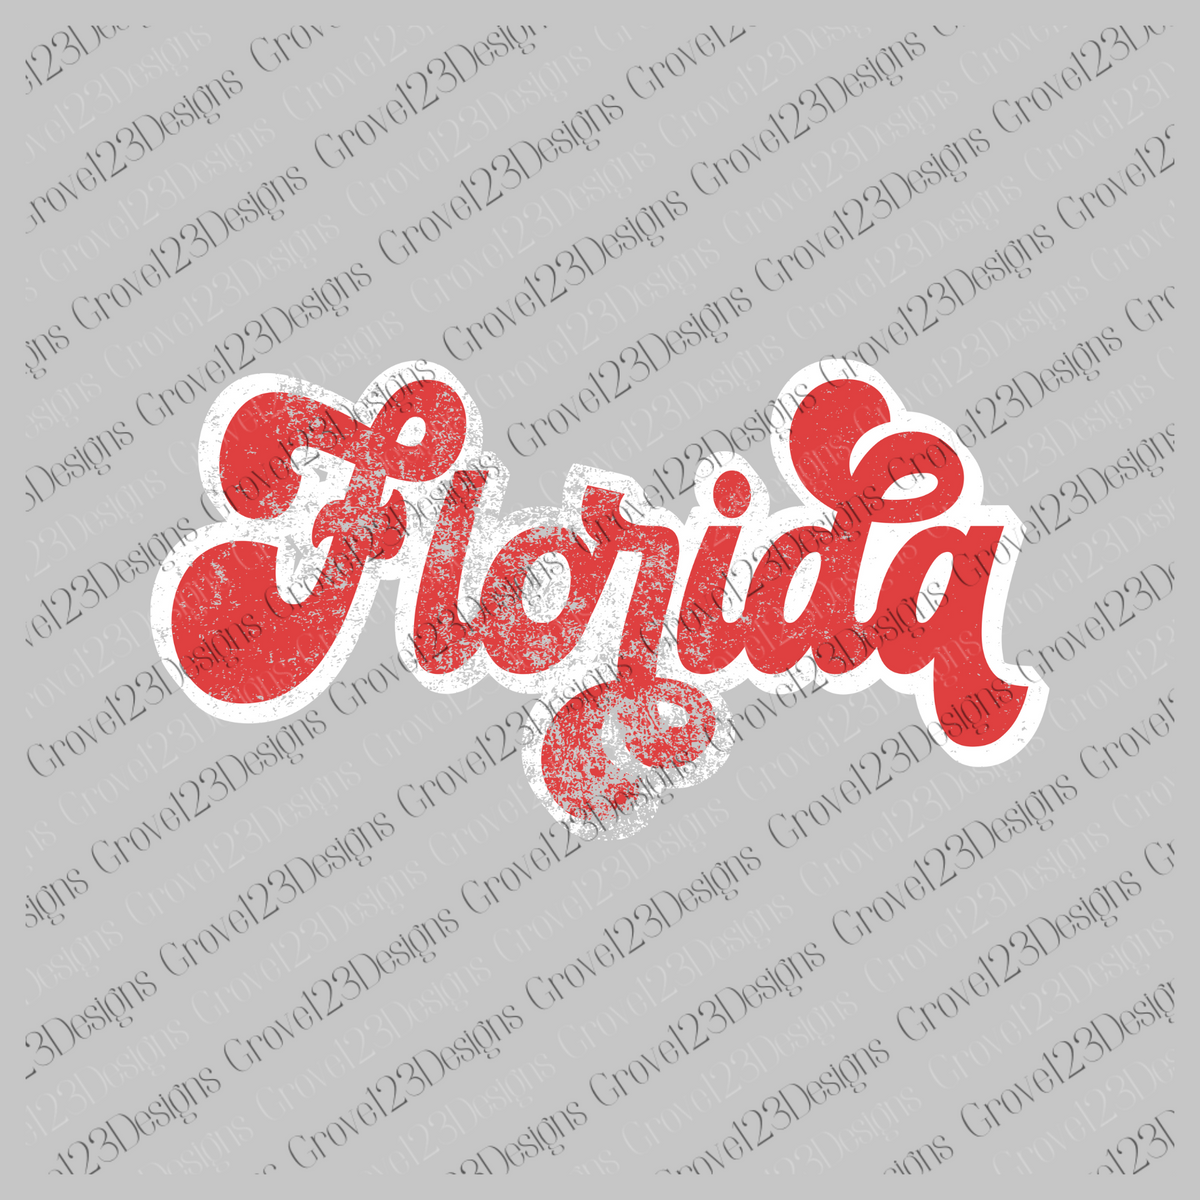 Florida Red & White Retro Shadow Distressed